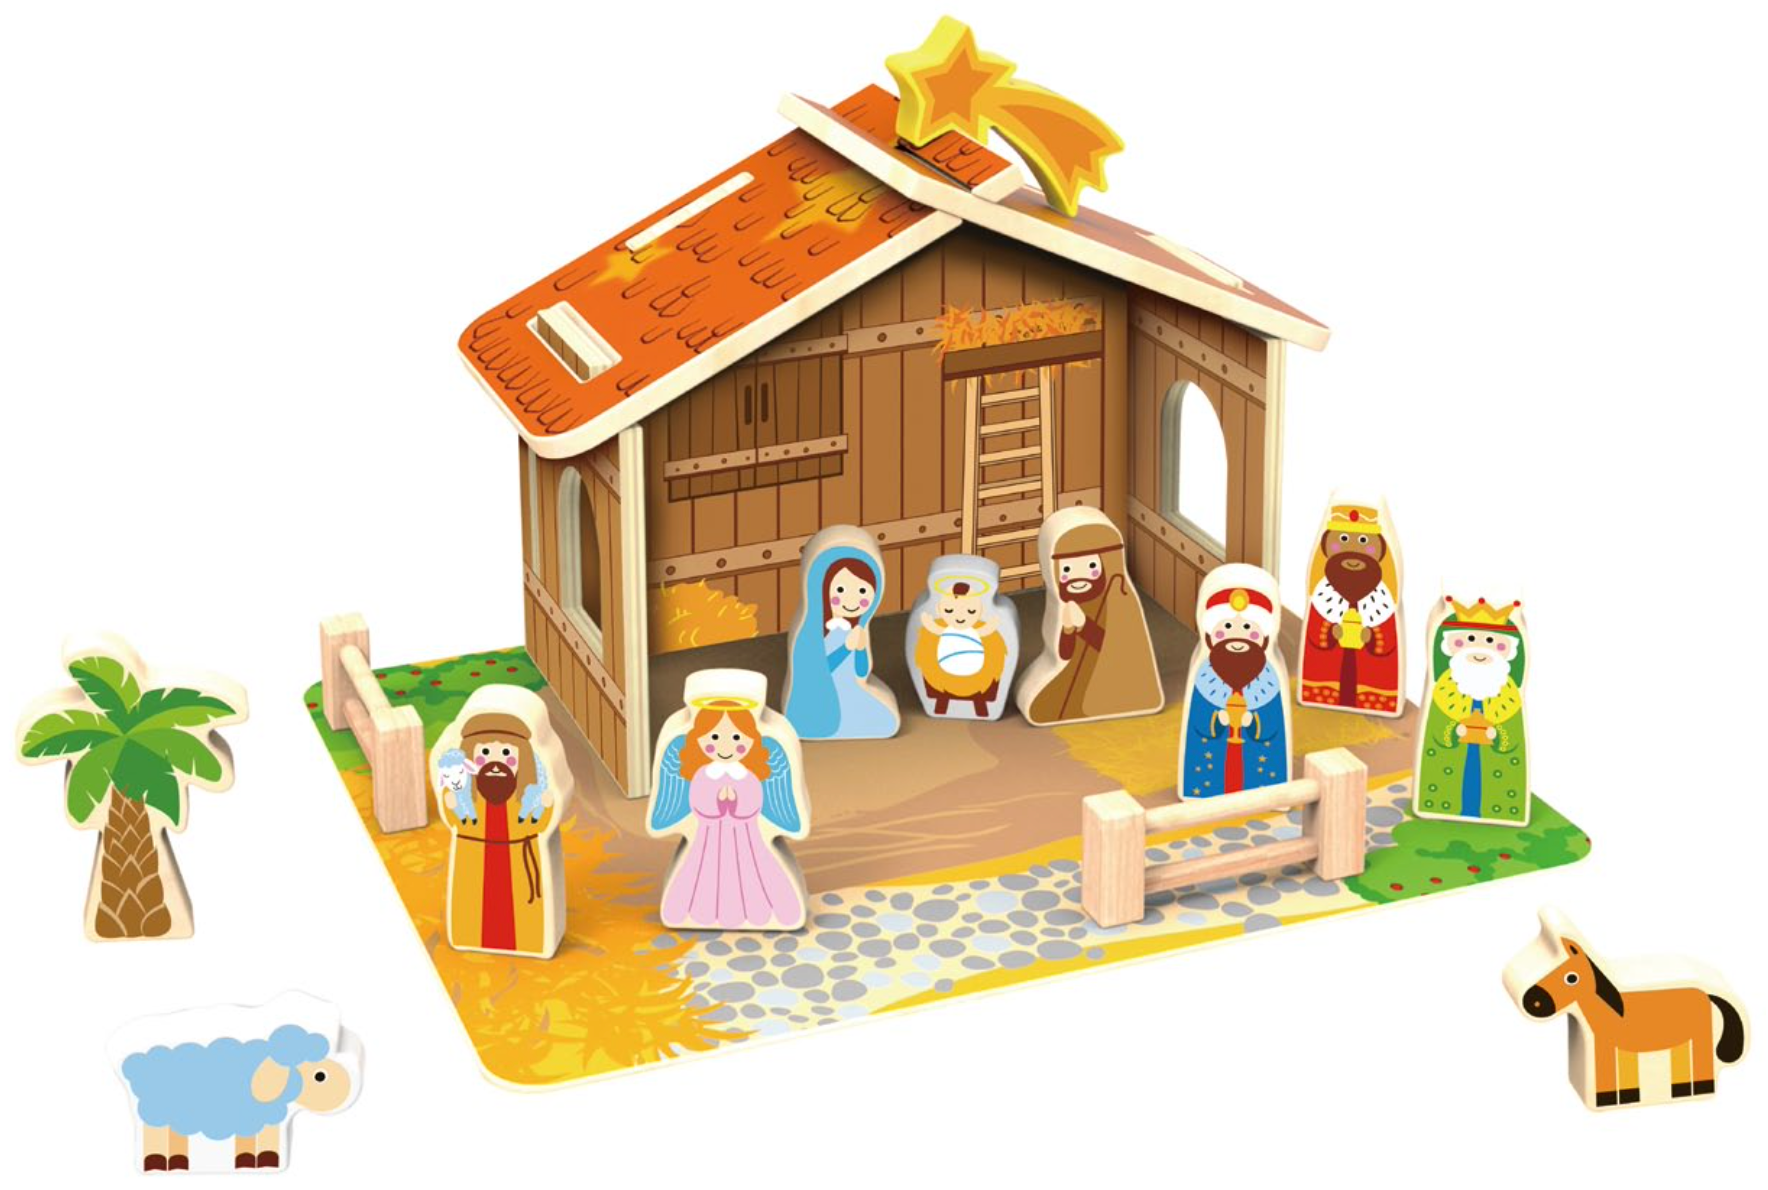 Toyster's Wooden Nativity Scene